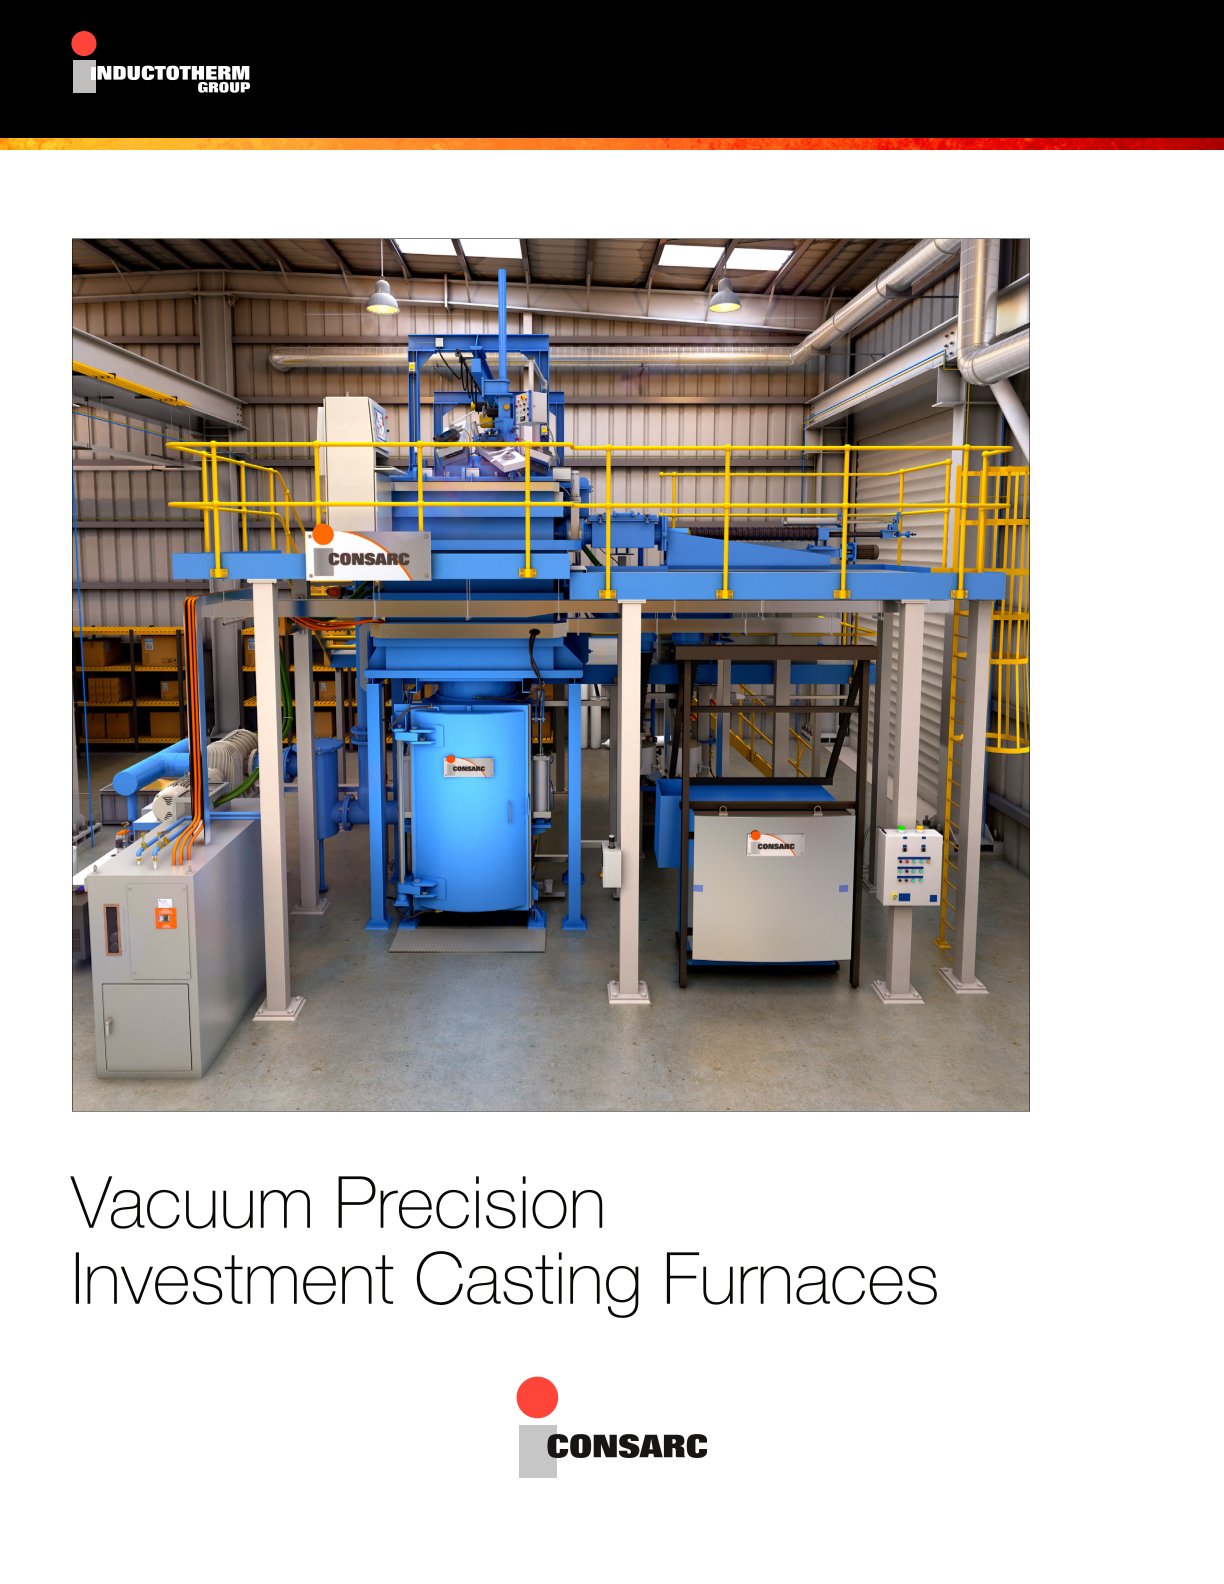 Vacuum Precision Investment Casting Furnace Guide